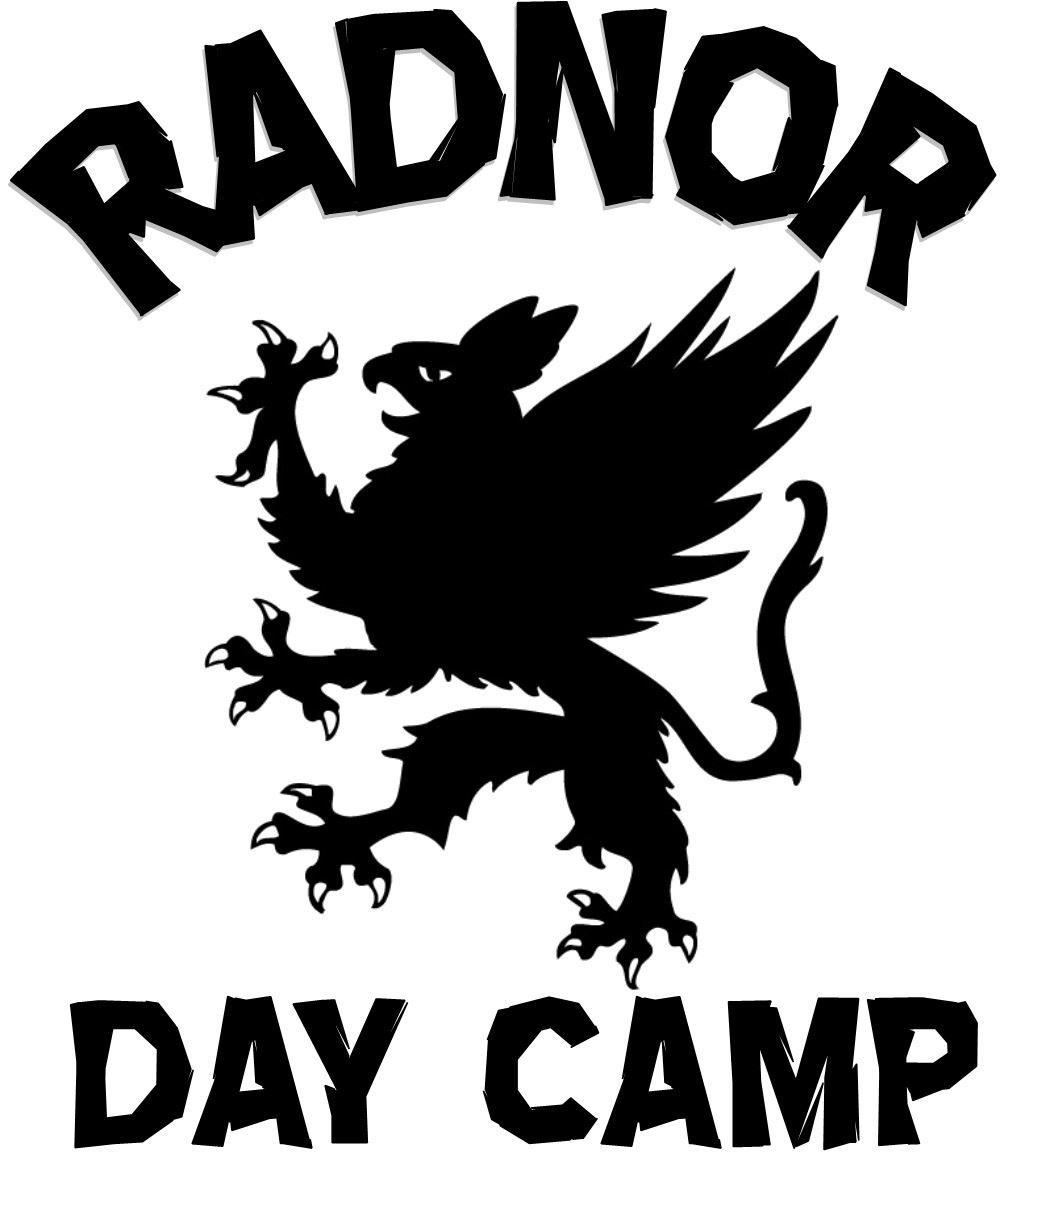 Radnor Logo - Programs & Initiatives | Radnor, PA - Official Website